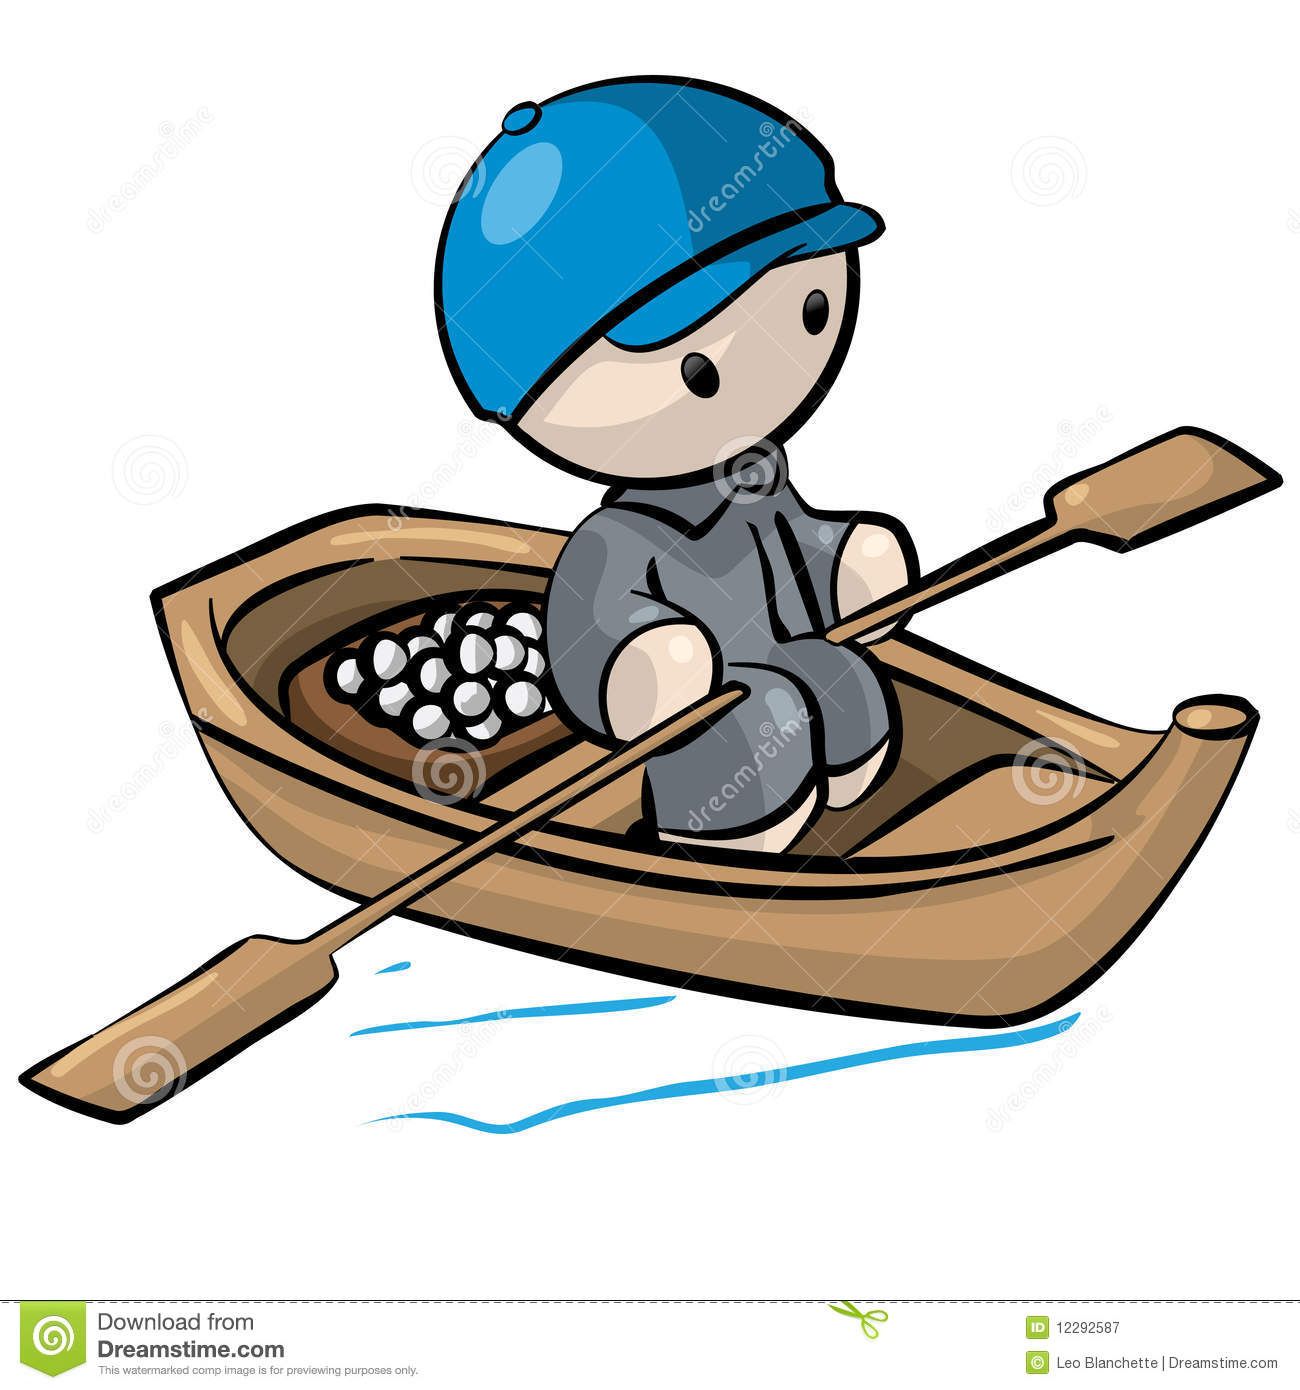 Little man in the boat